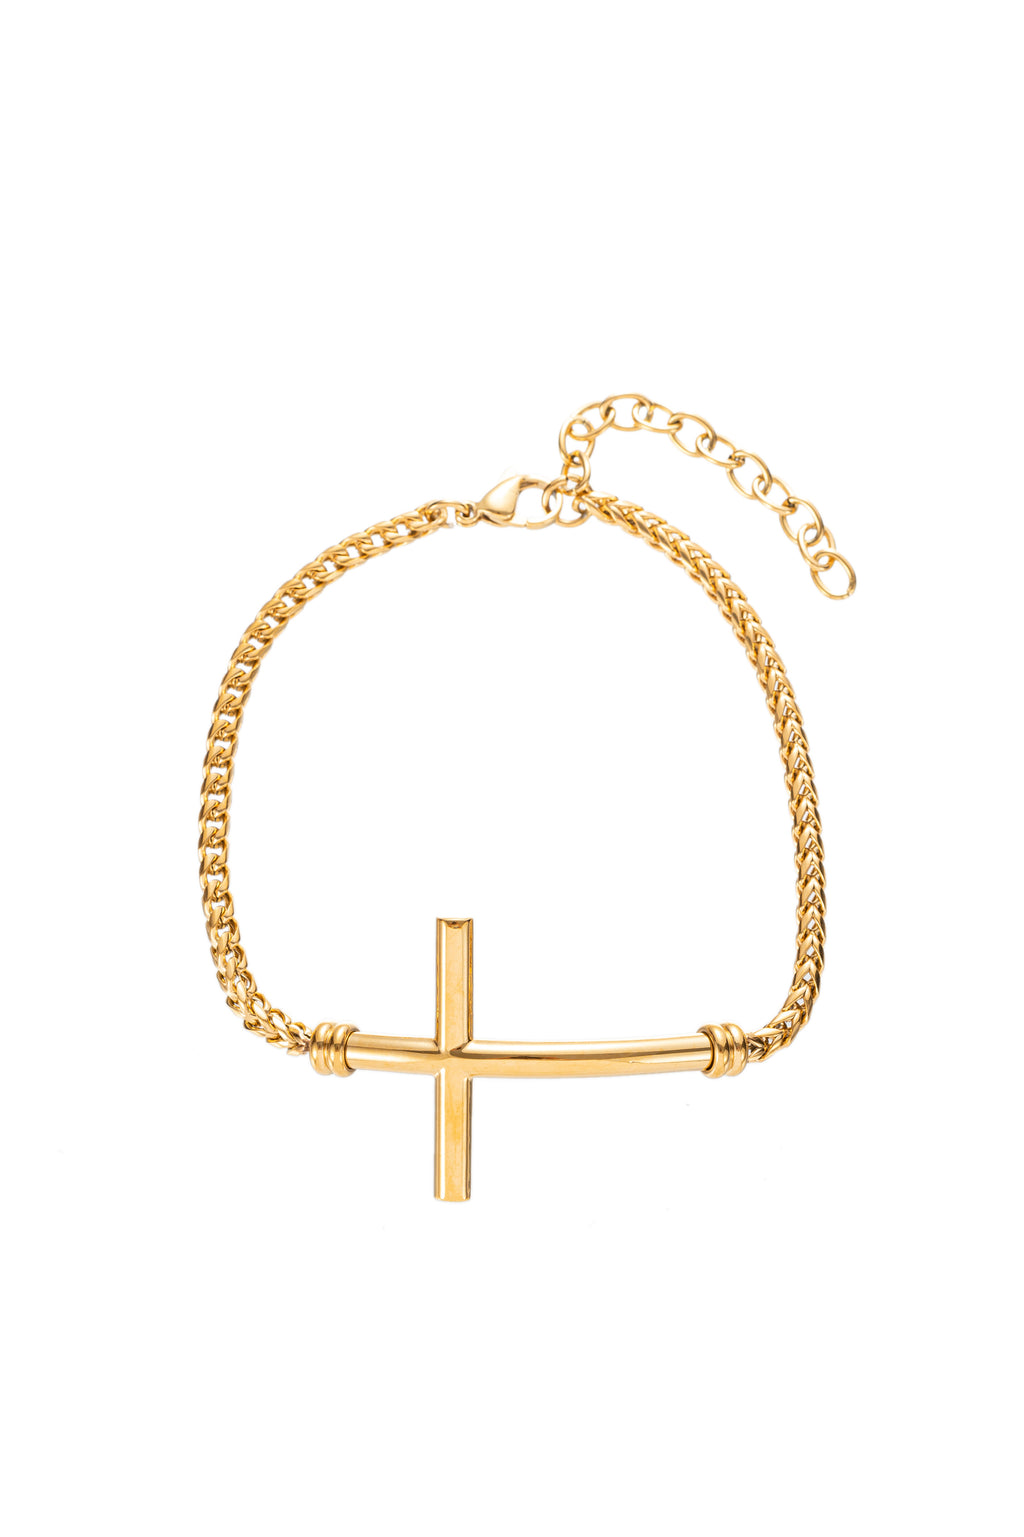 Gold titanium cross pendant necklace.